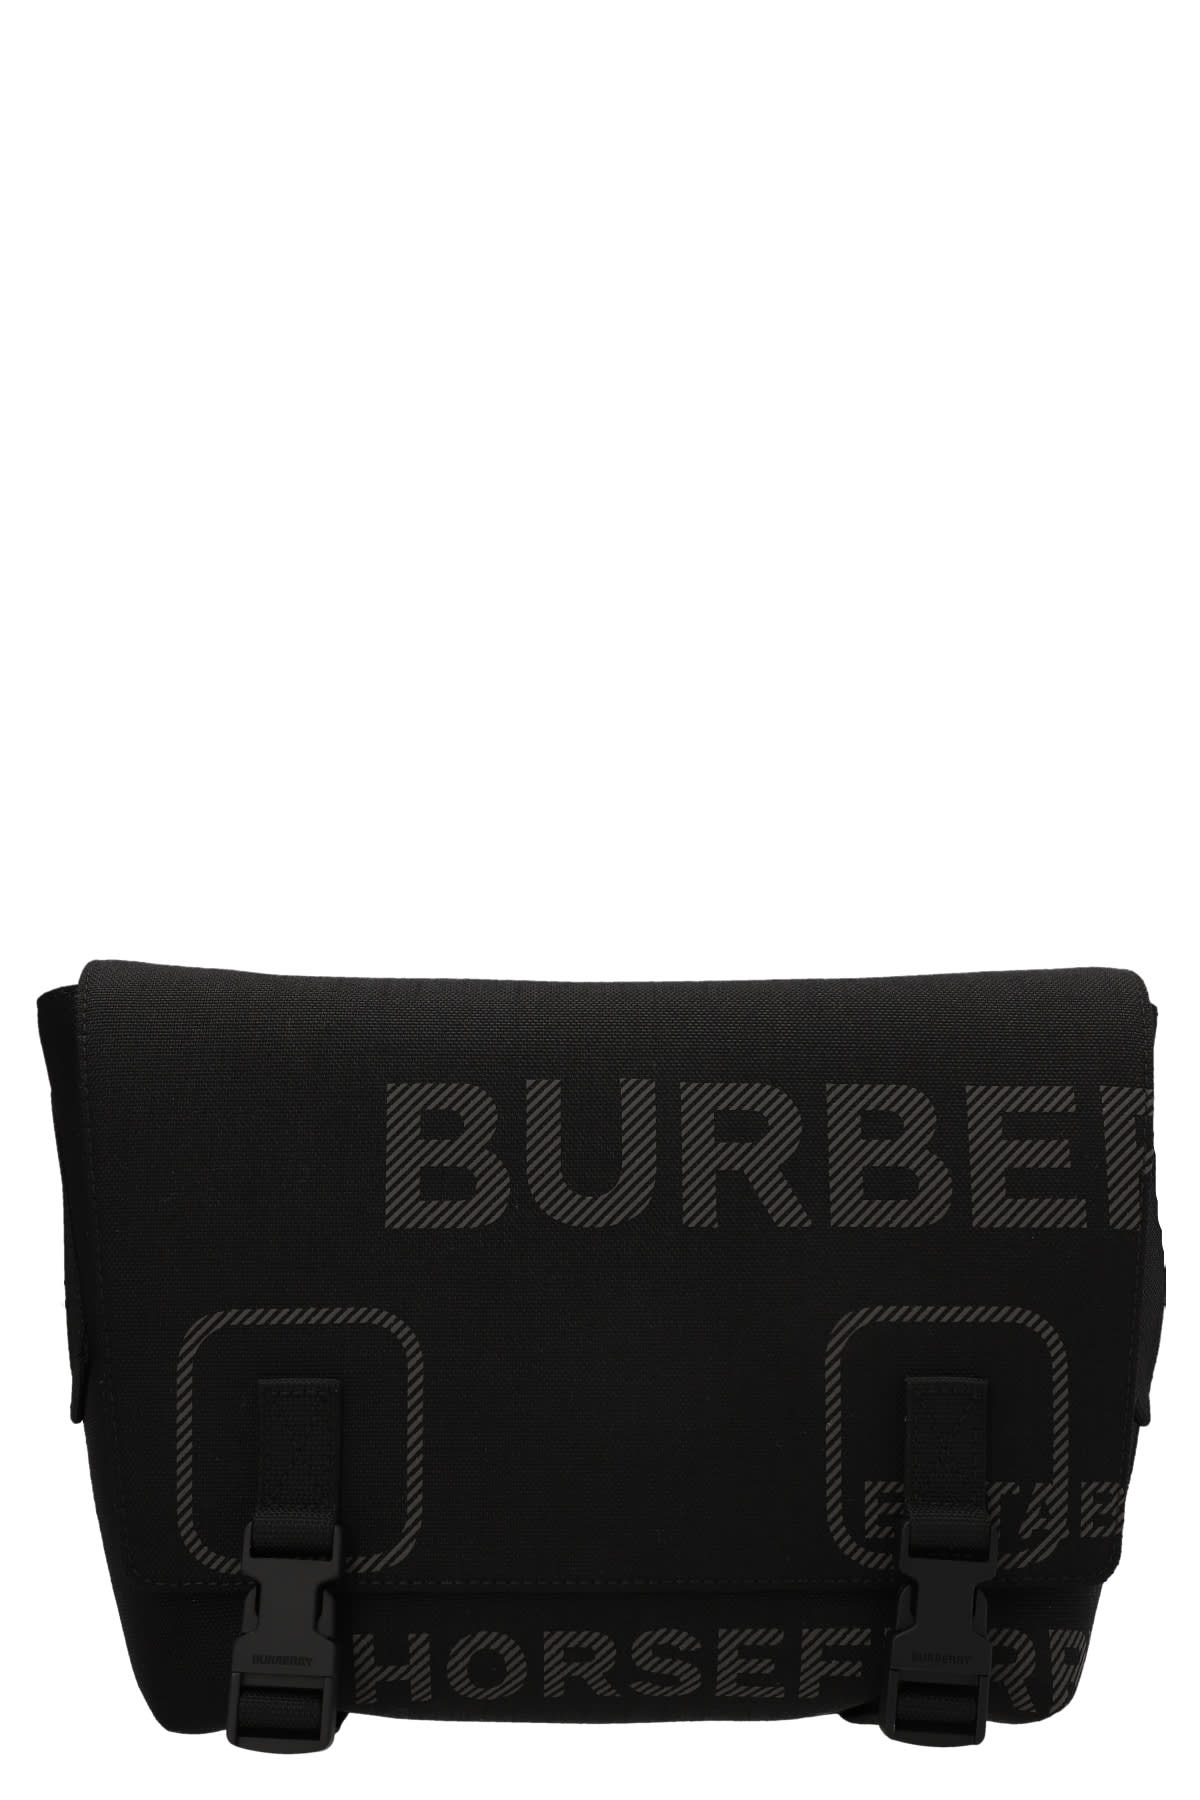 Burberry lock Crossbody Bag